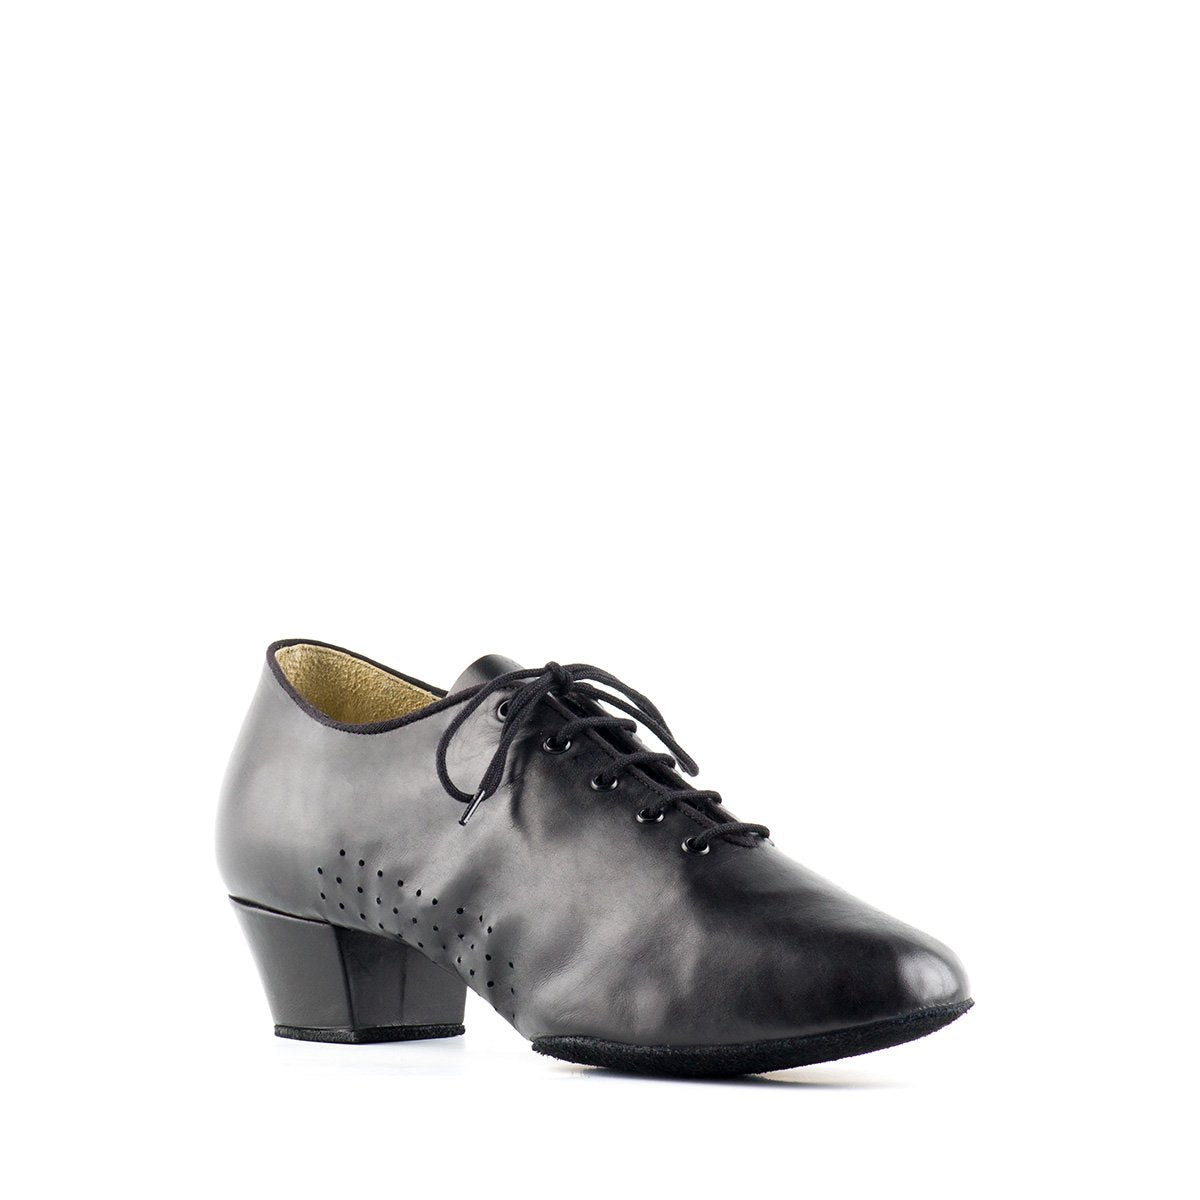 Black leather Latin shoe for men